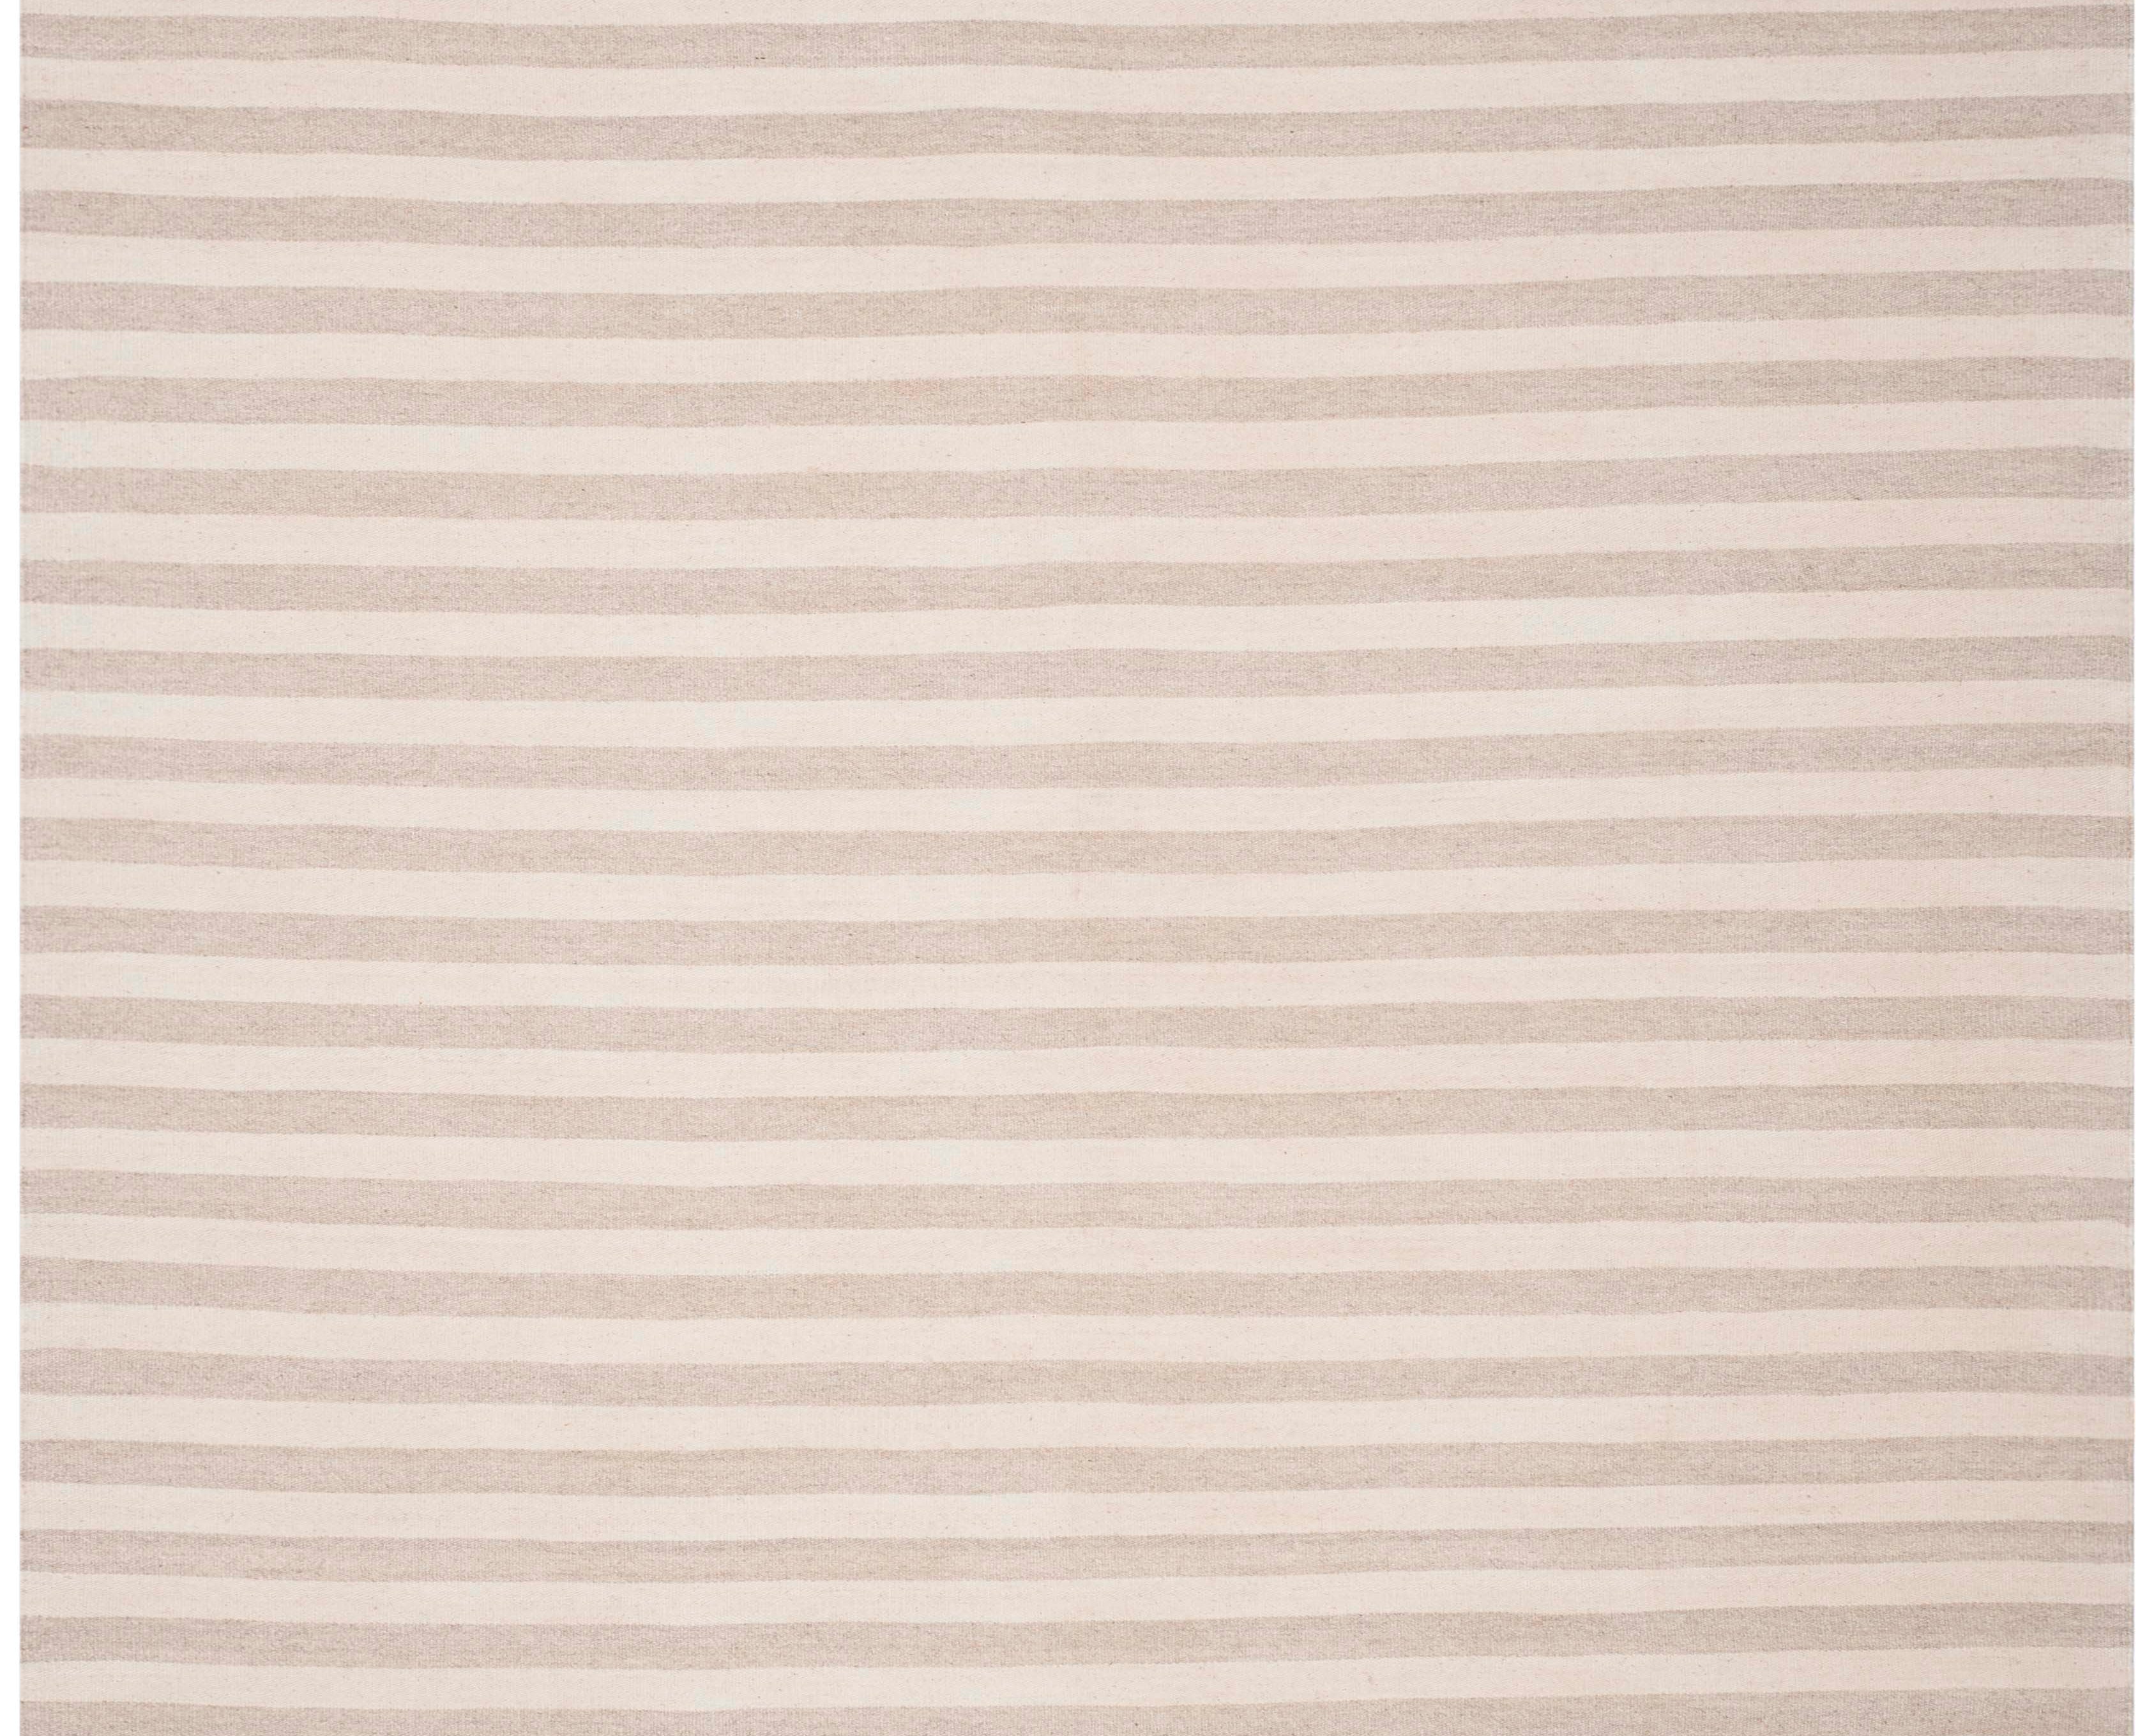 Ralph Lauren Canyon Stripe Rug, RLR2868 - Dune